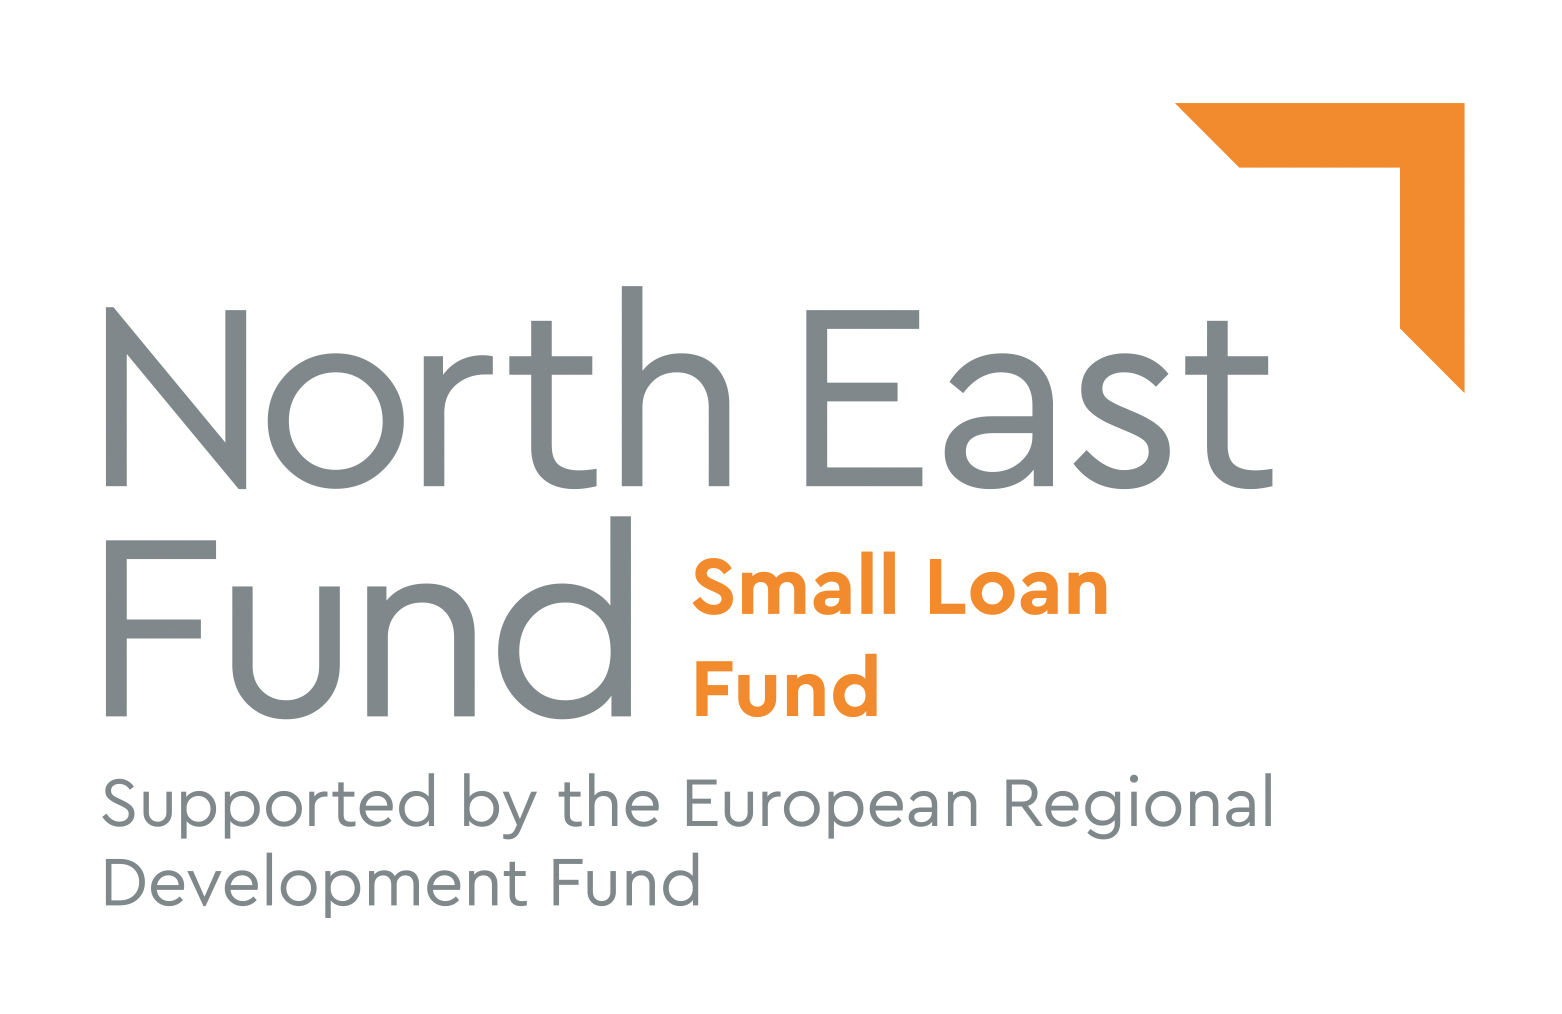 NEF Small Loan Fund